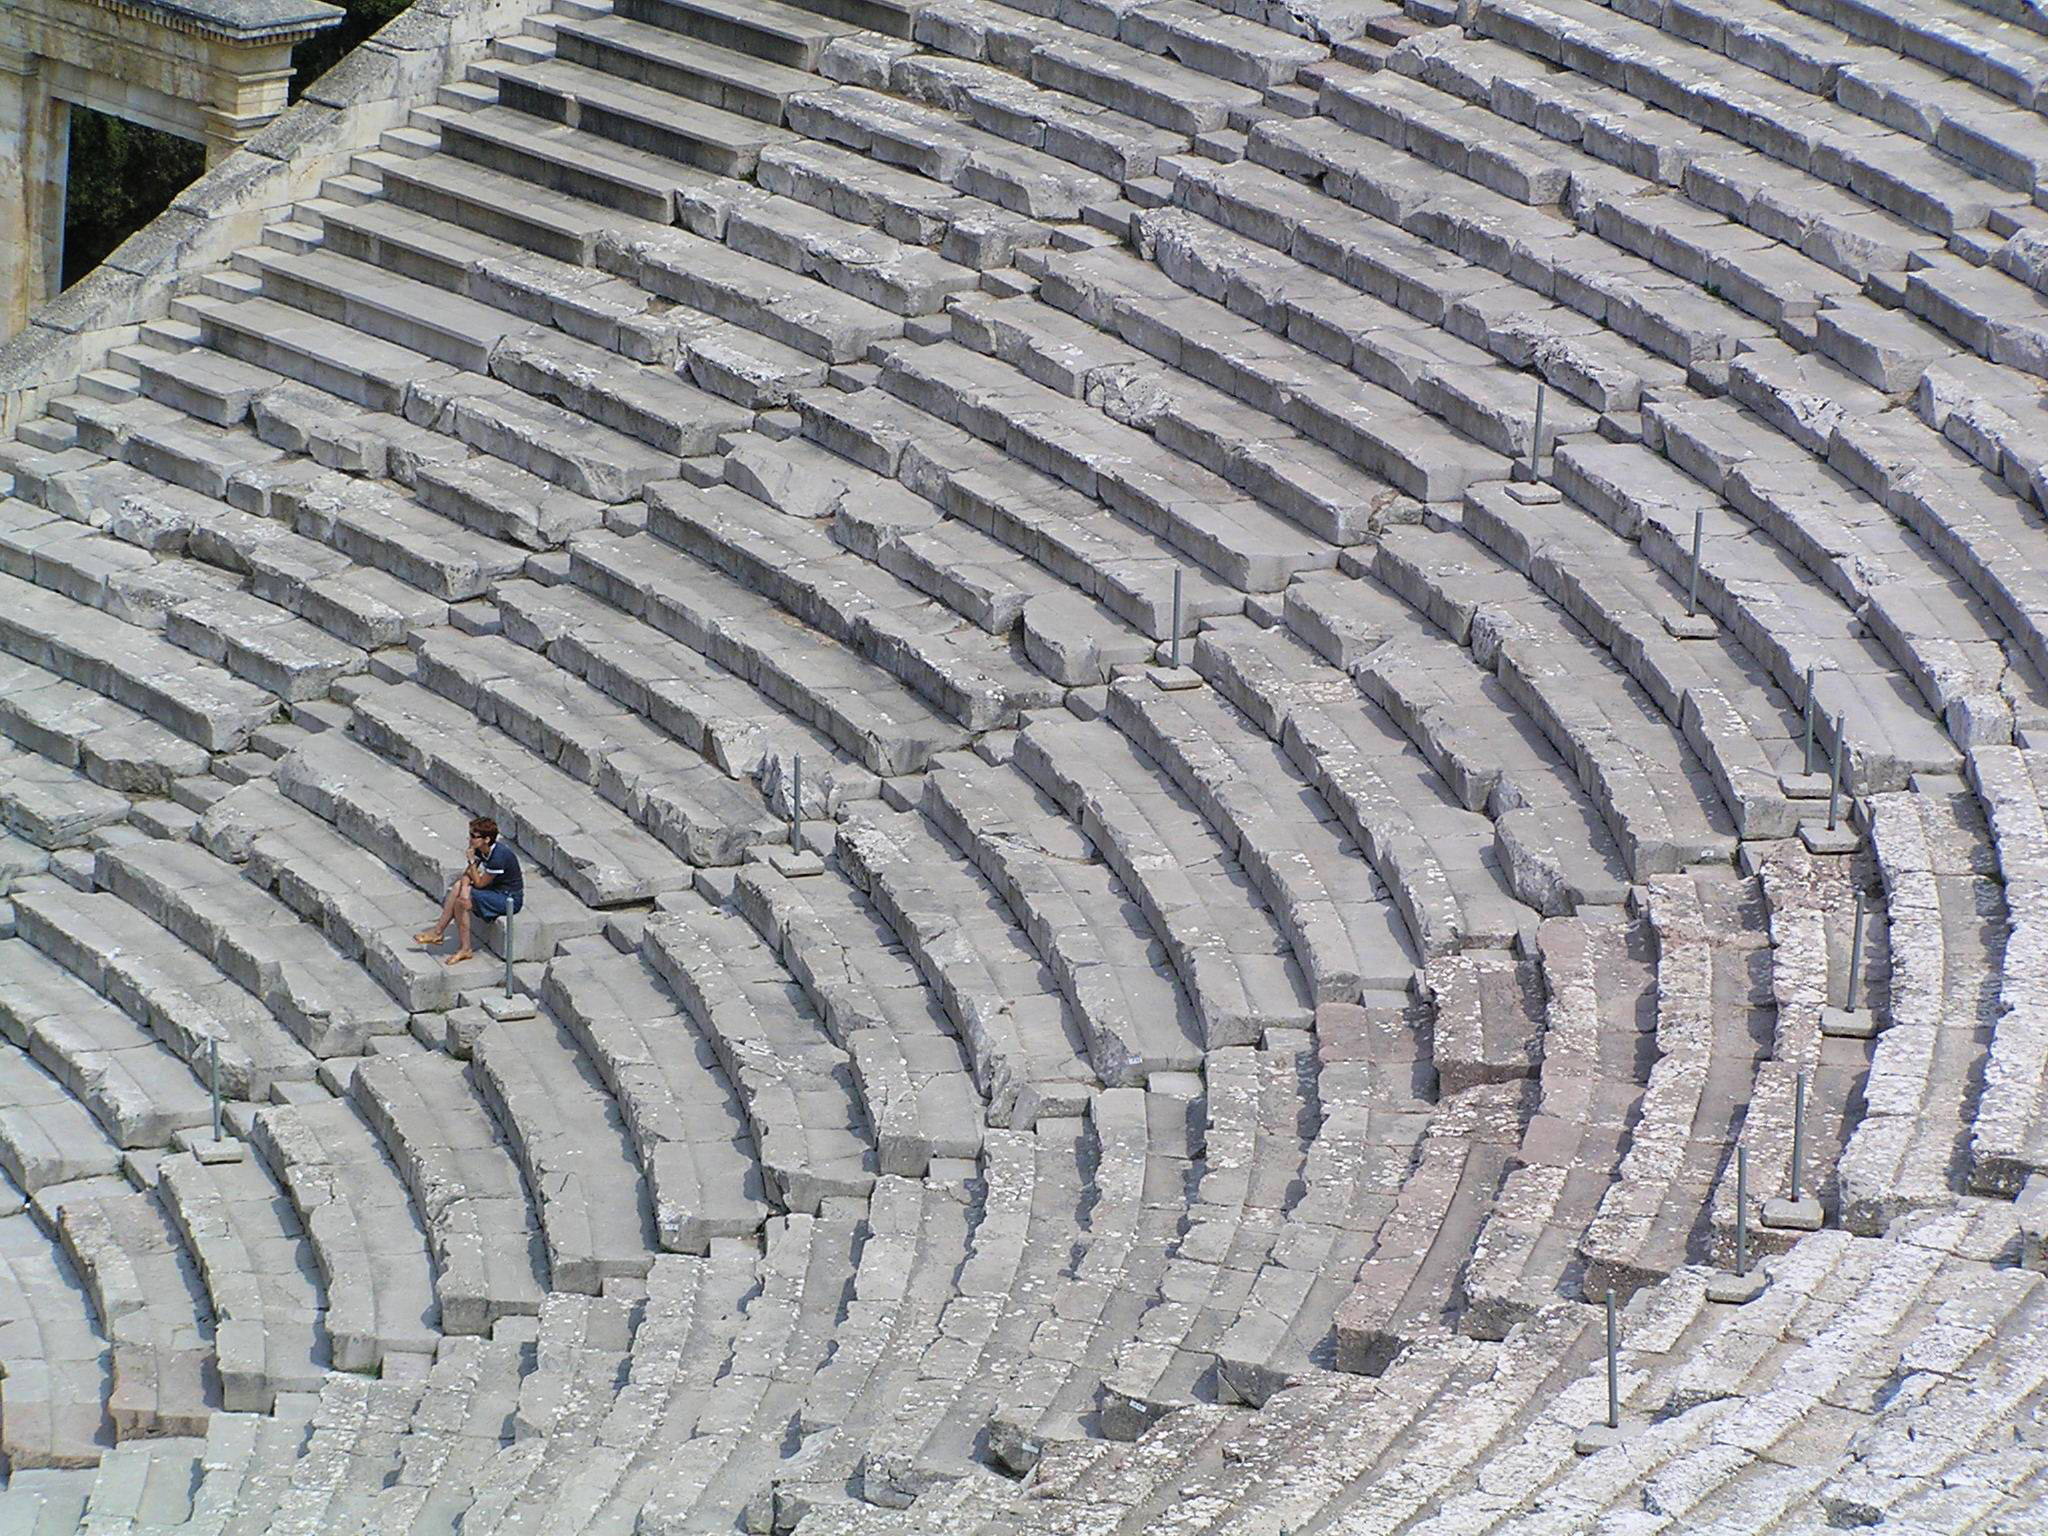 Epidaurus seats